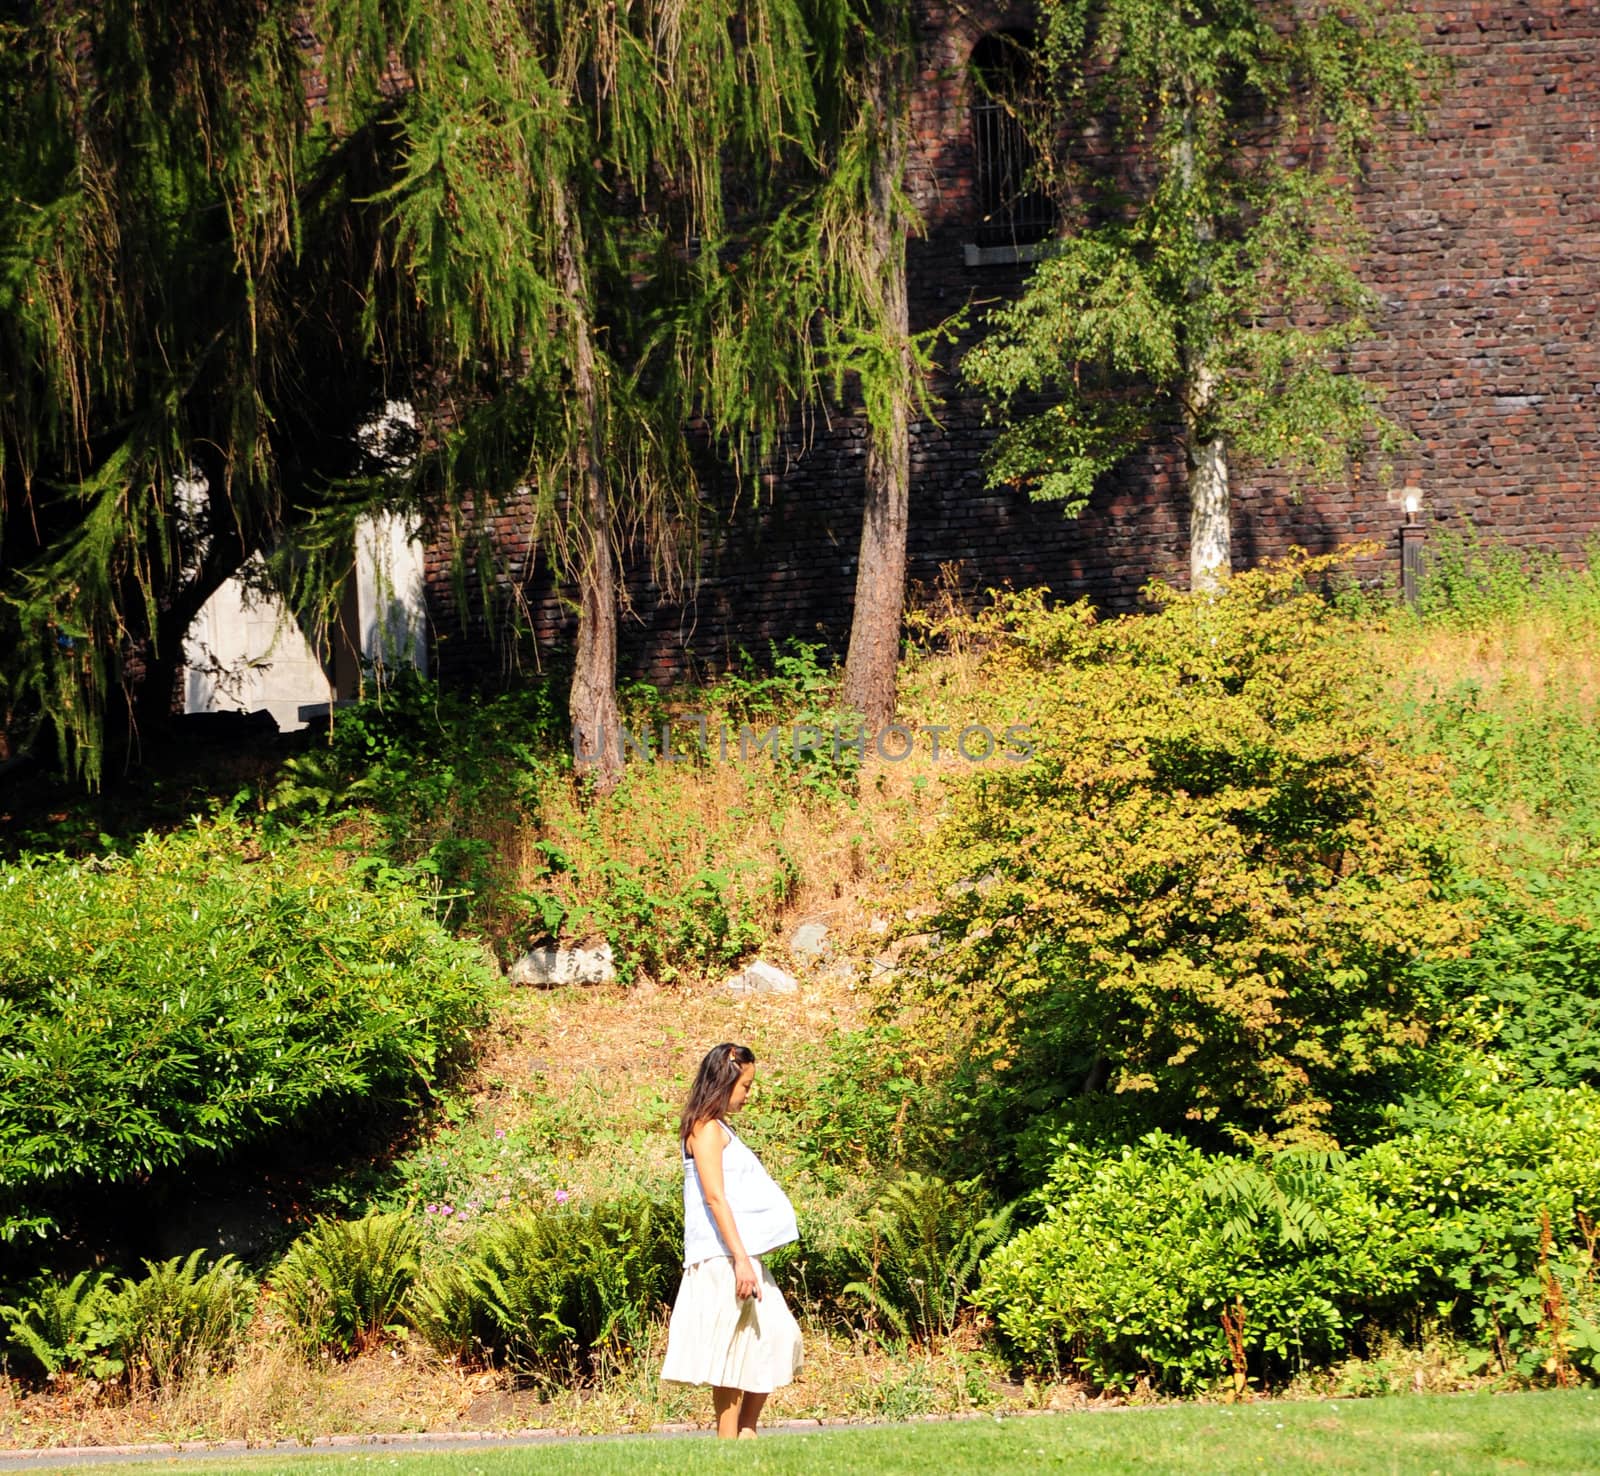 Pregnant woman walking in a public park.